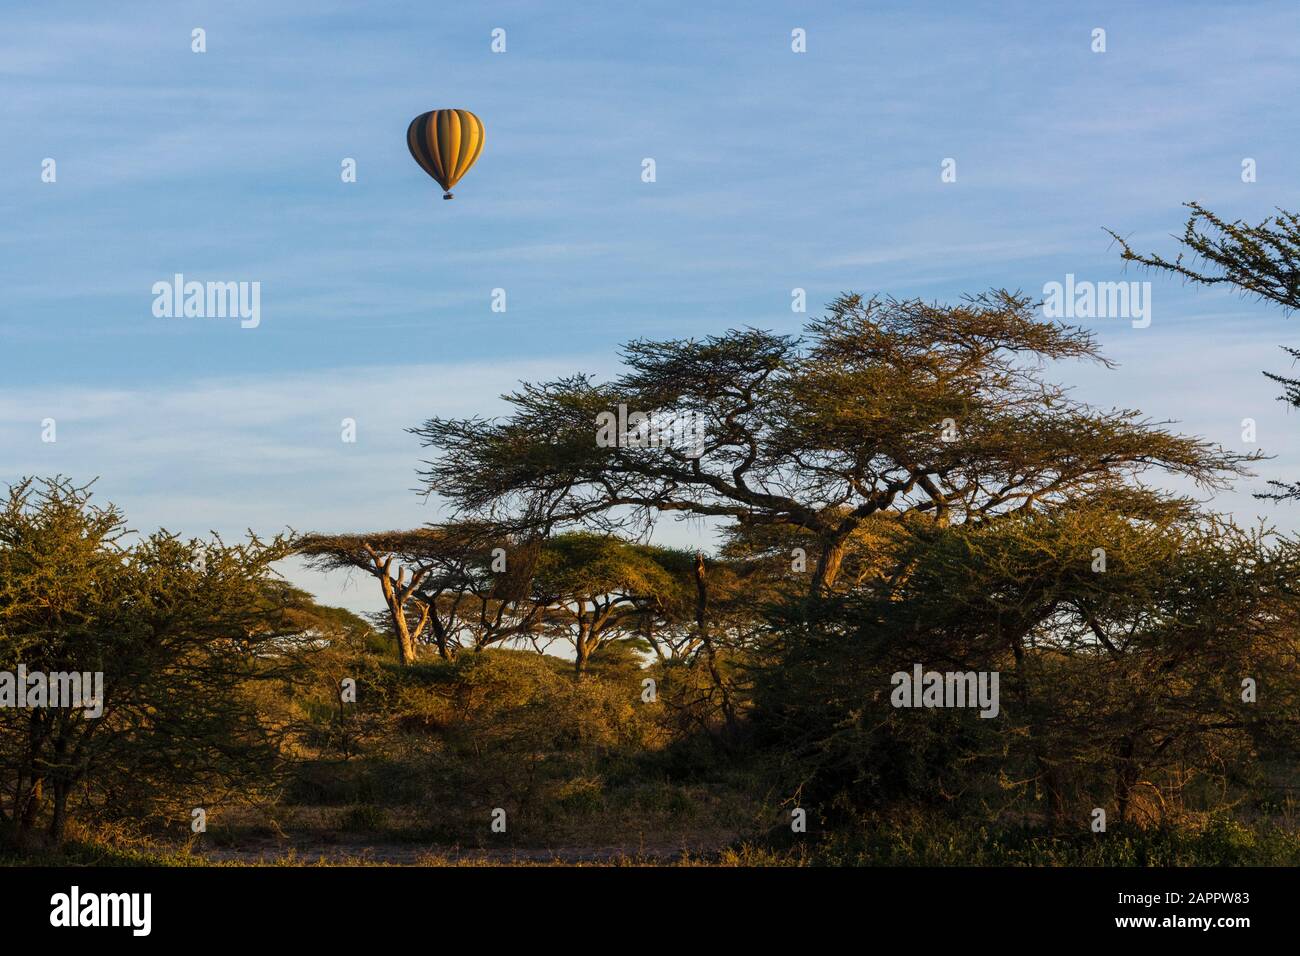 Hot air baloon in flight over acacias, Ndutu, Ngorongoro Conservation Area, Serengeti, Tanzania Stock Photo